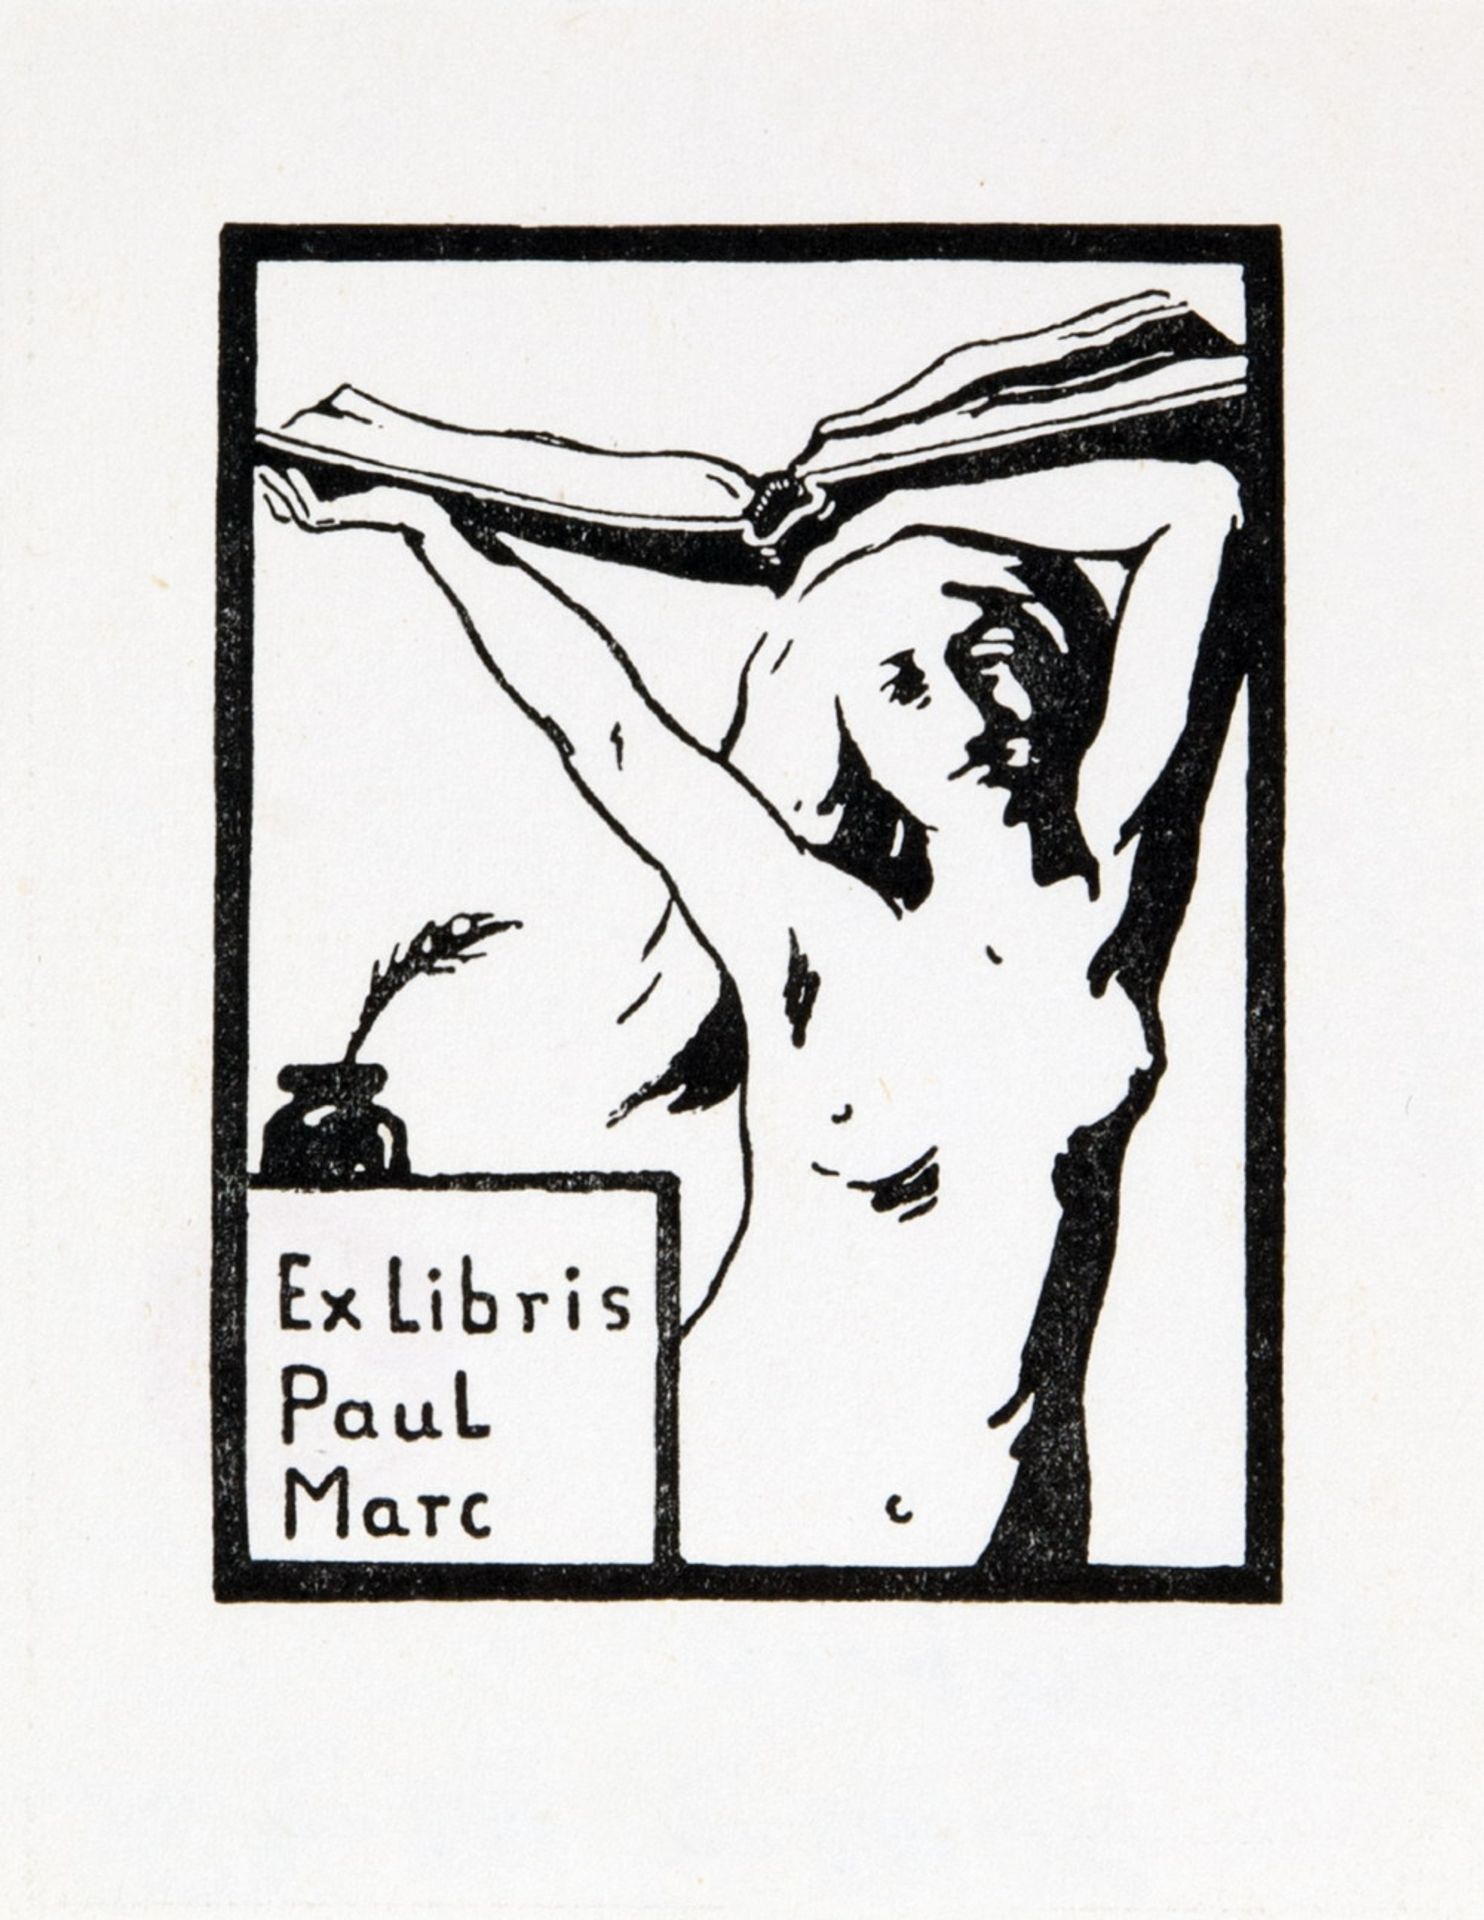 Franz Marc. Exlibris Franz Marc. - Ex libris Paul Marc. - Image 2 of 2